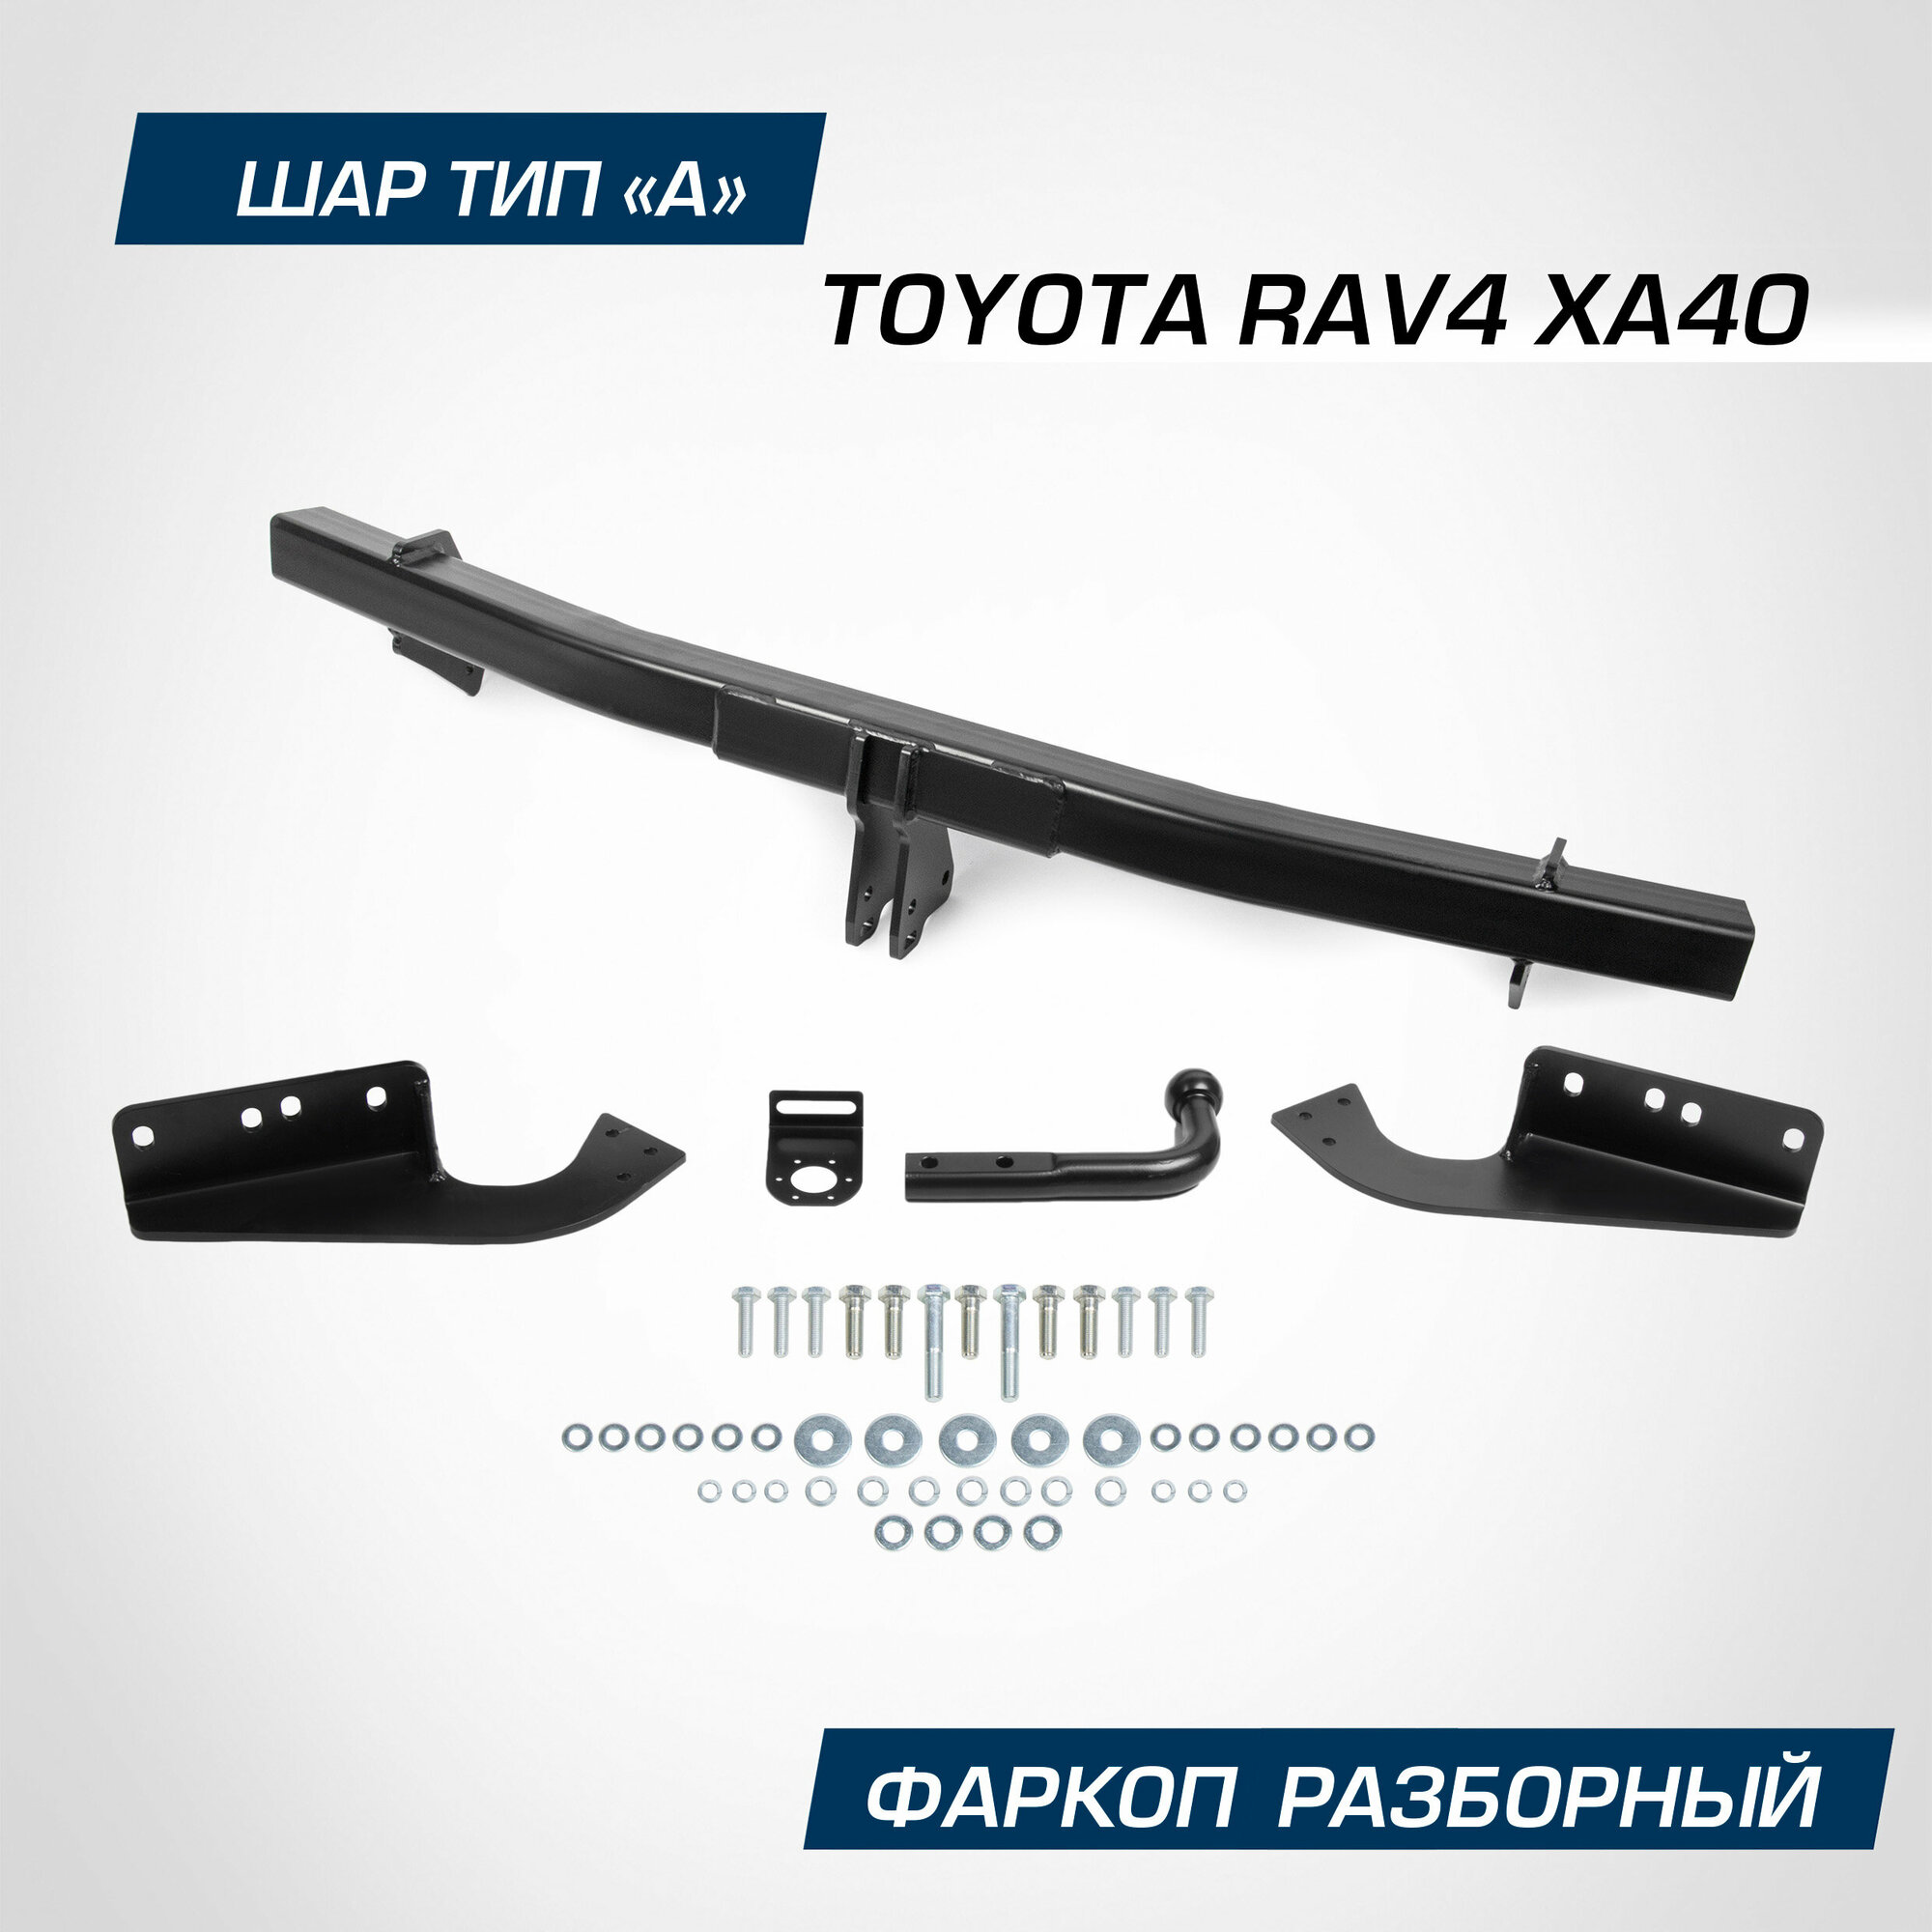 Фаркоп Berg для Toyota RAV4 (Тойота РАВ 4) CA40 2012-2019 шар A 1200/75 кг F.5711.001